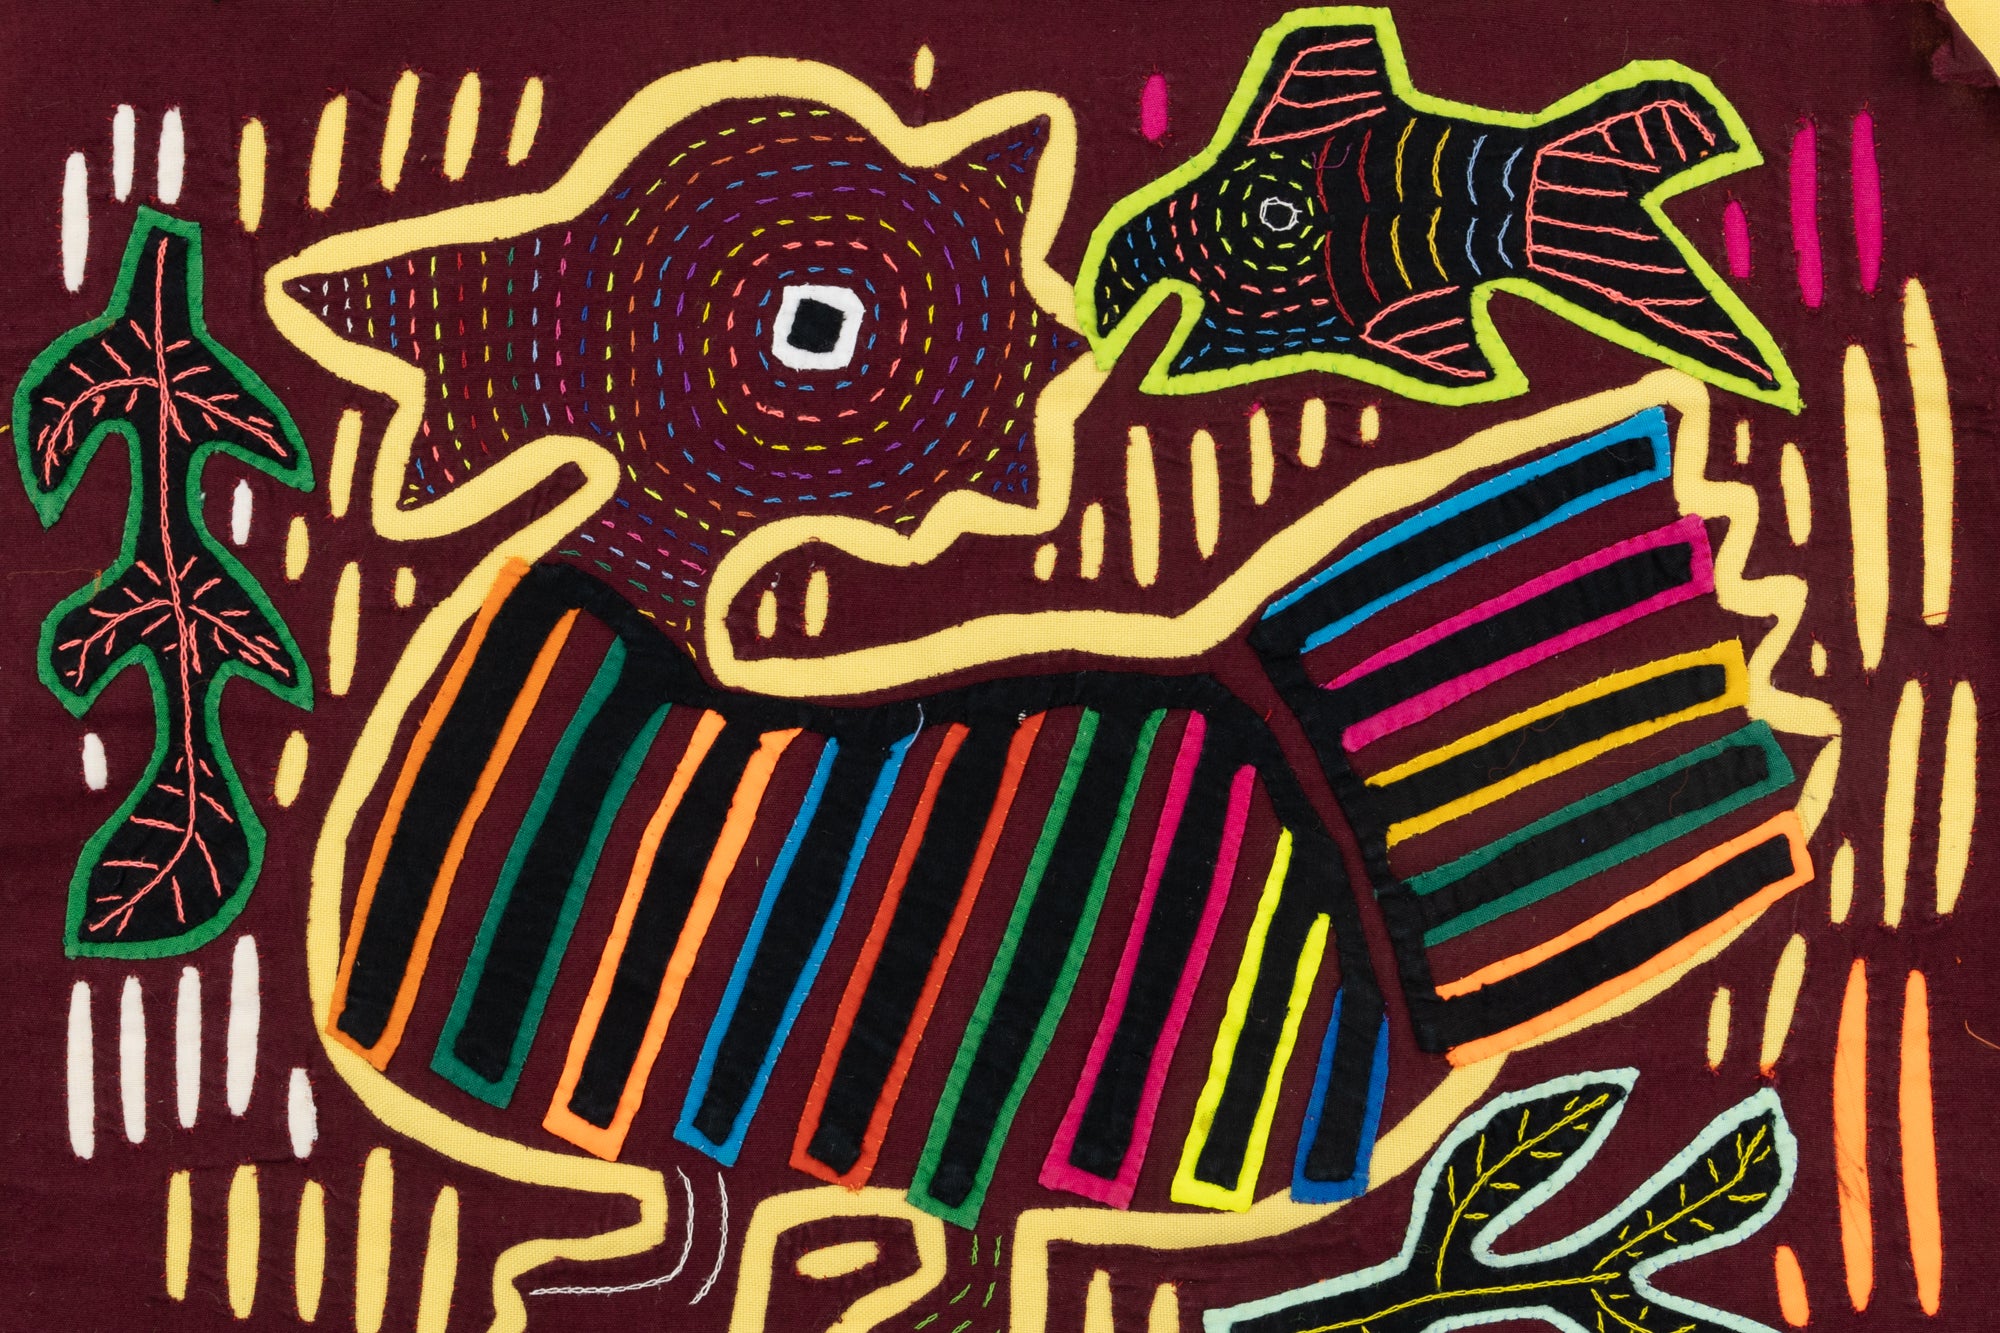 Kuna Indian Hand Stitch Duck and Fins Panama Mola Textile Art